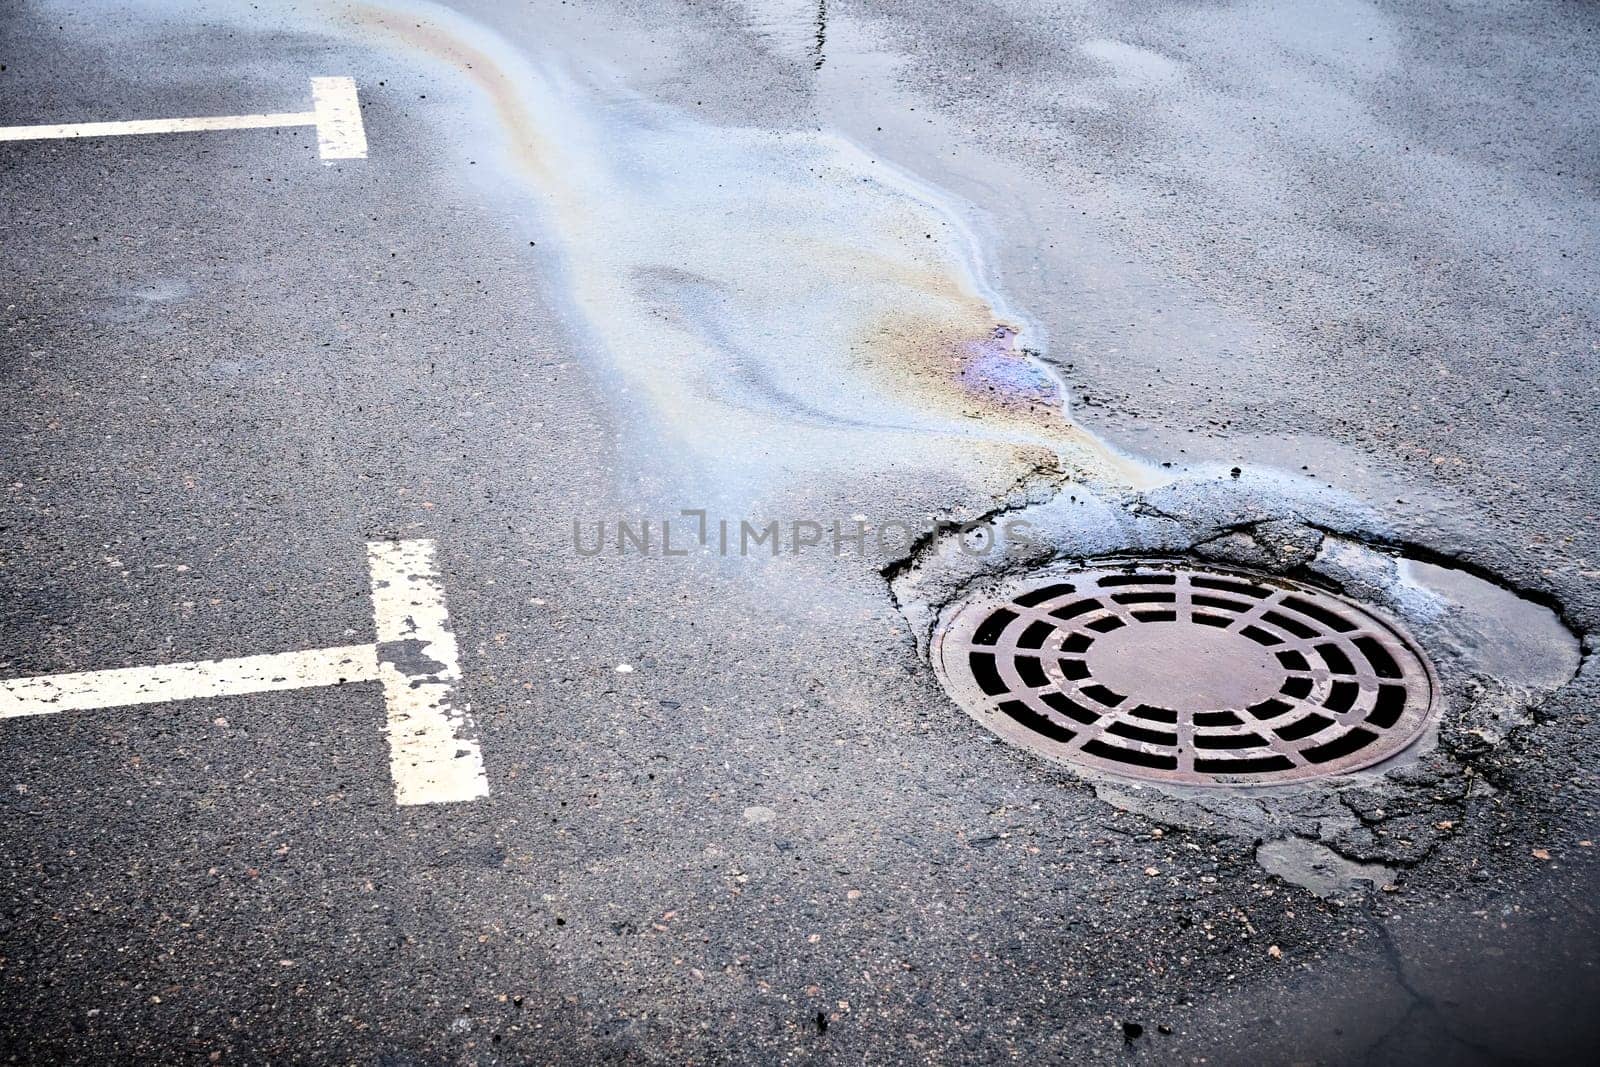 An oil slick of gasoline or oil on an asphalt road flows into a storm drain by AliaksandrFilimonau